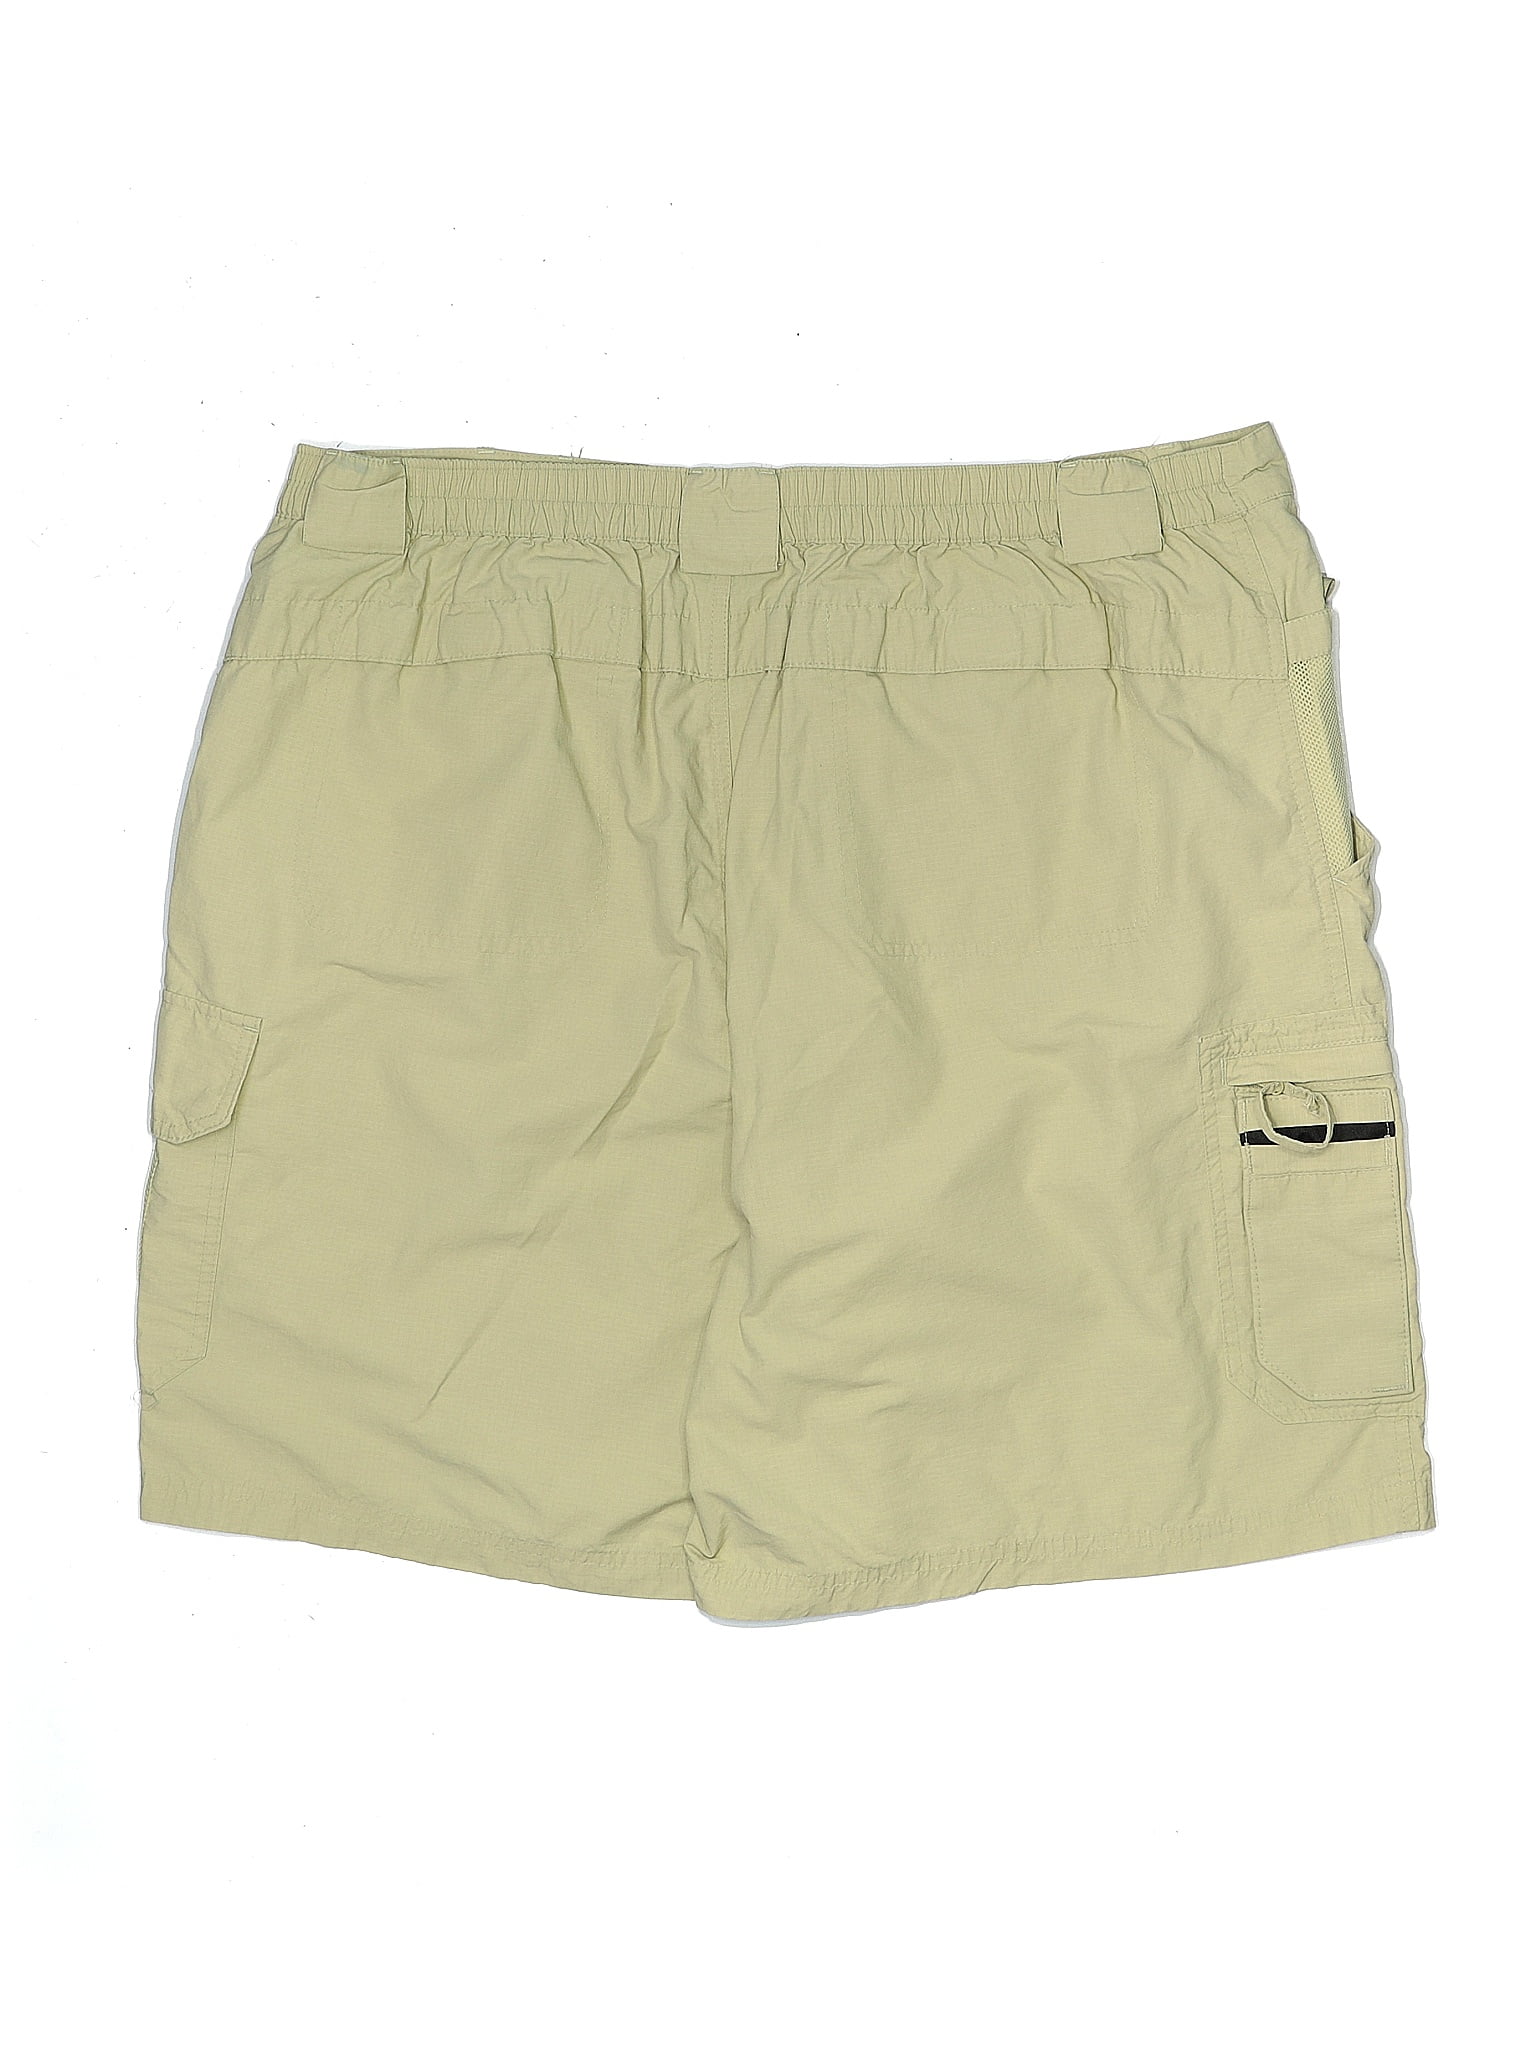 Reel Legends Green Cargo Shorts Size 42 (EU) - 15% off